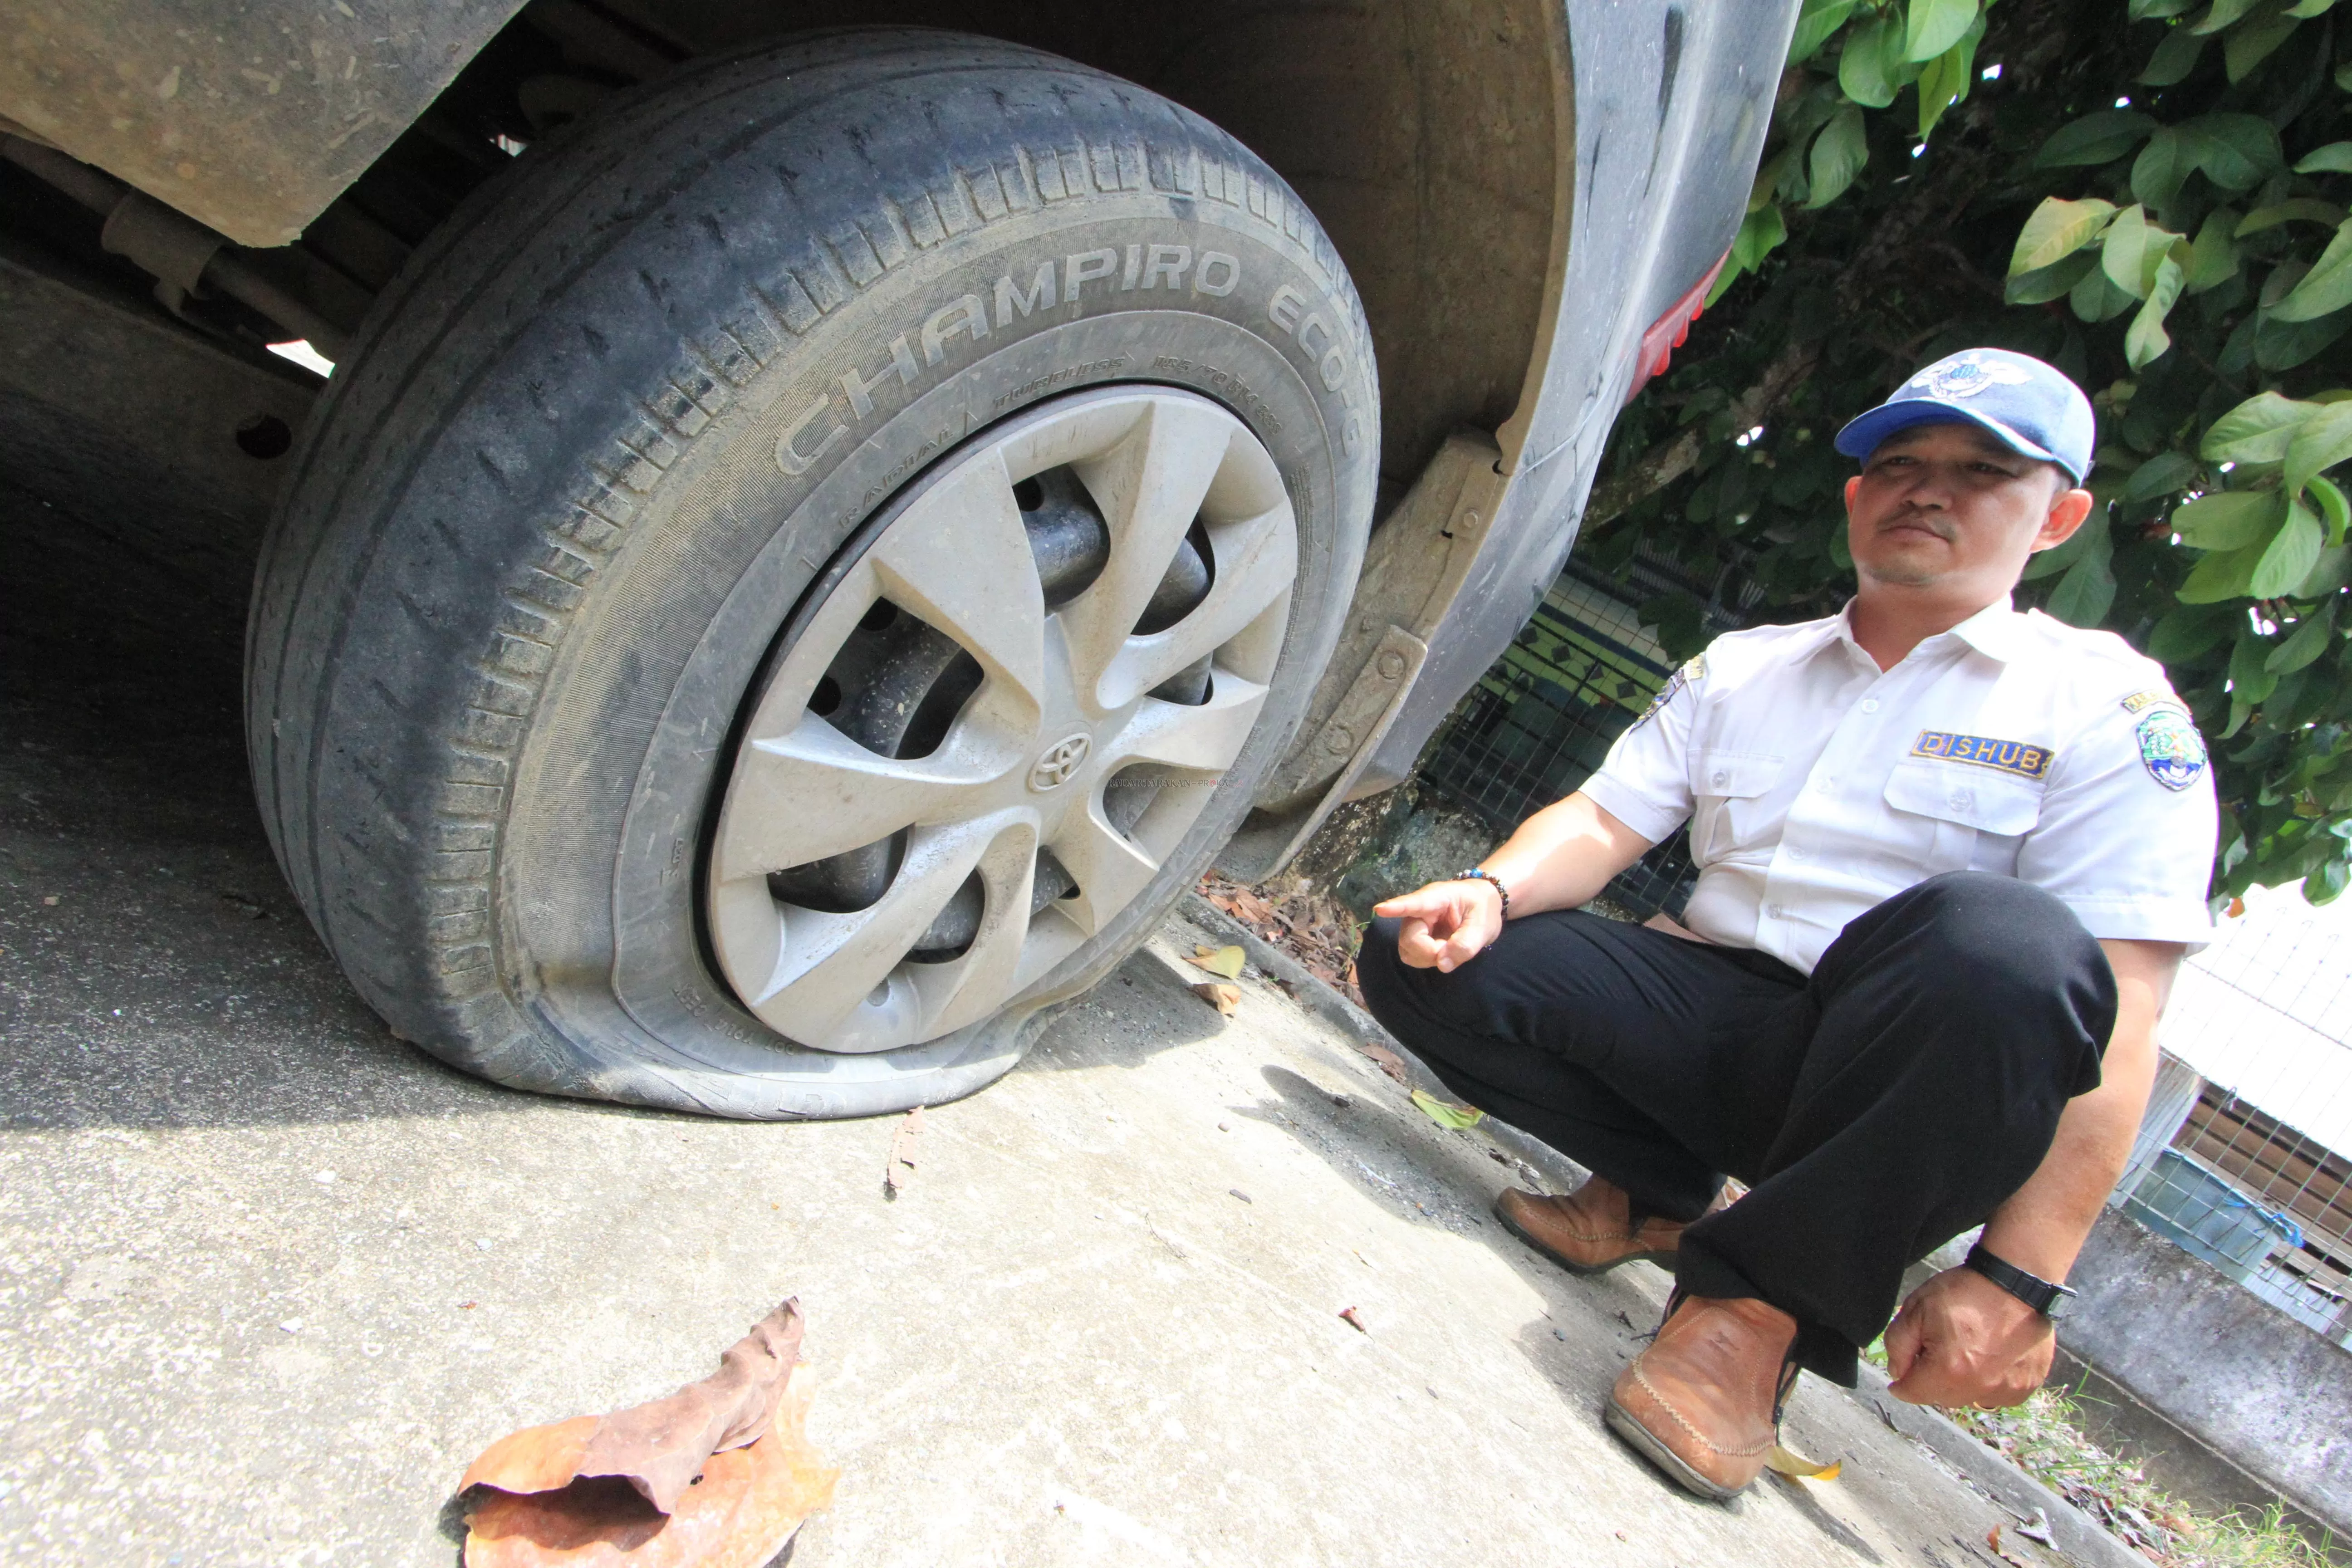 DITERTIBKAN: Salah satu dari 15 unit kendaraan roda empat (R4) yang dilakukan pengempesan ban lantaran parkir bermalam di Pelabuhan Kayan II, Tanjung Selor, kemarin (18/3).